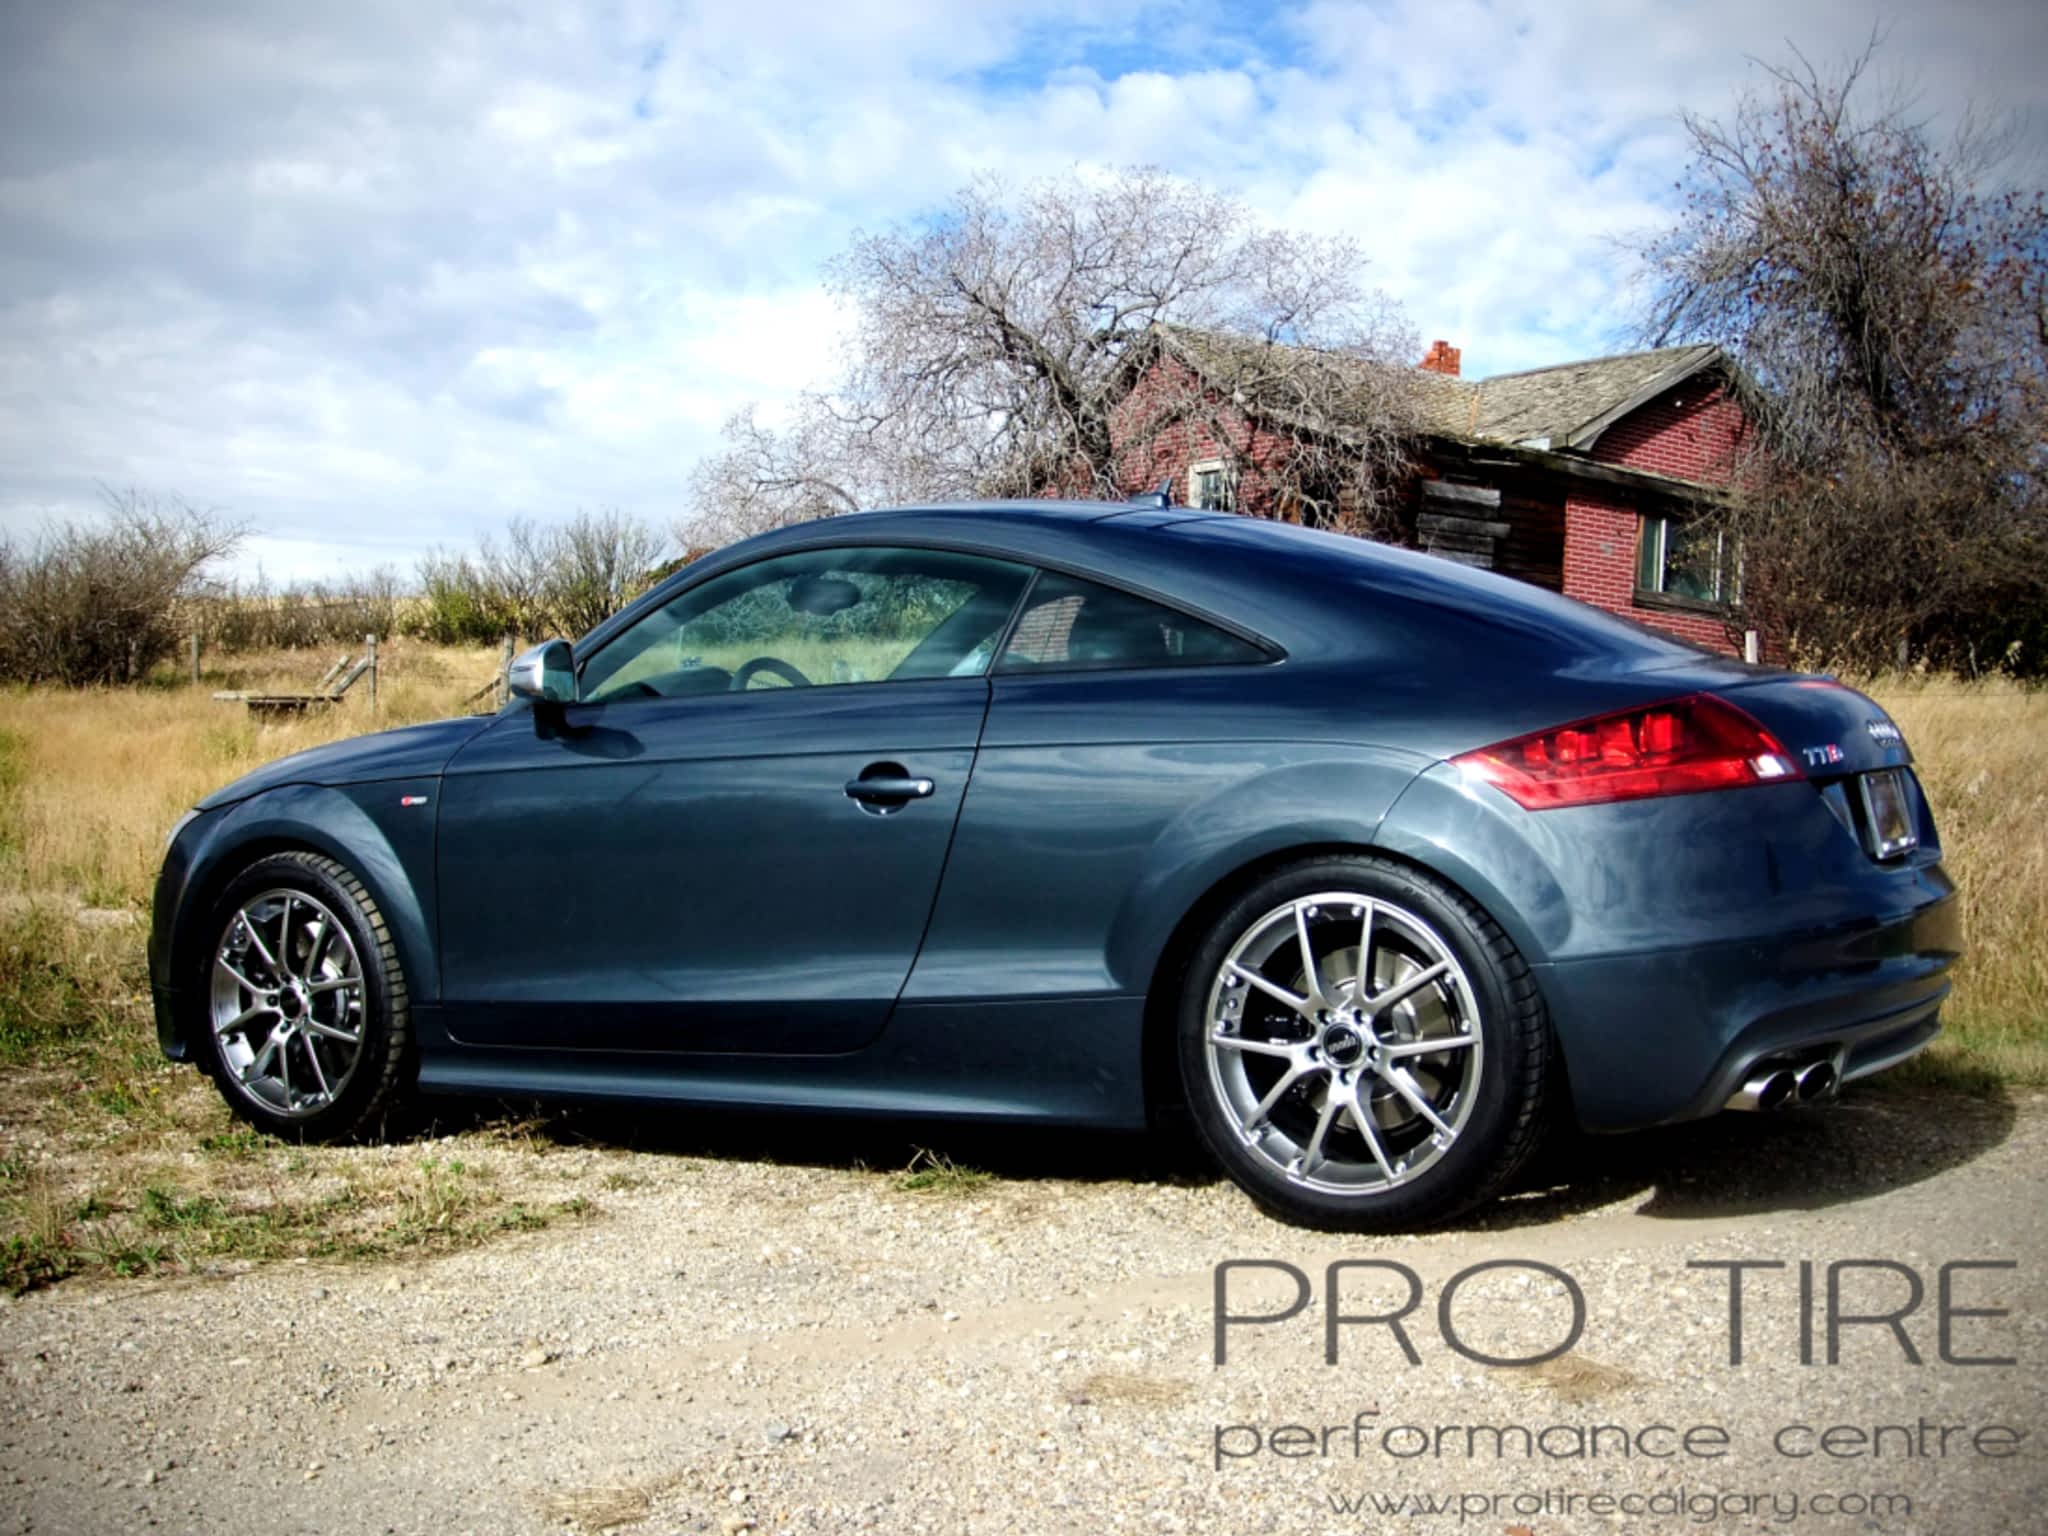 photo Pro Tire (Calgary) Ltd